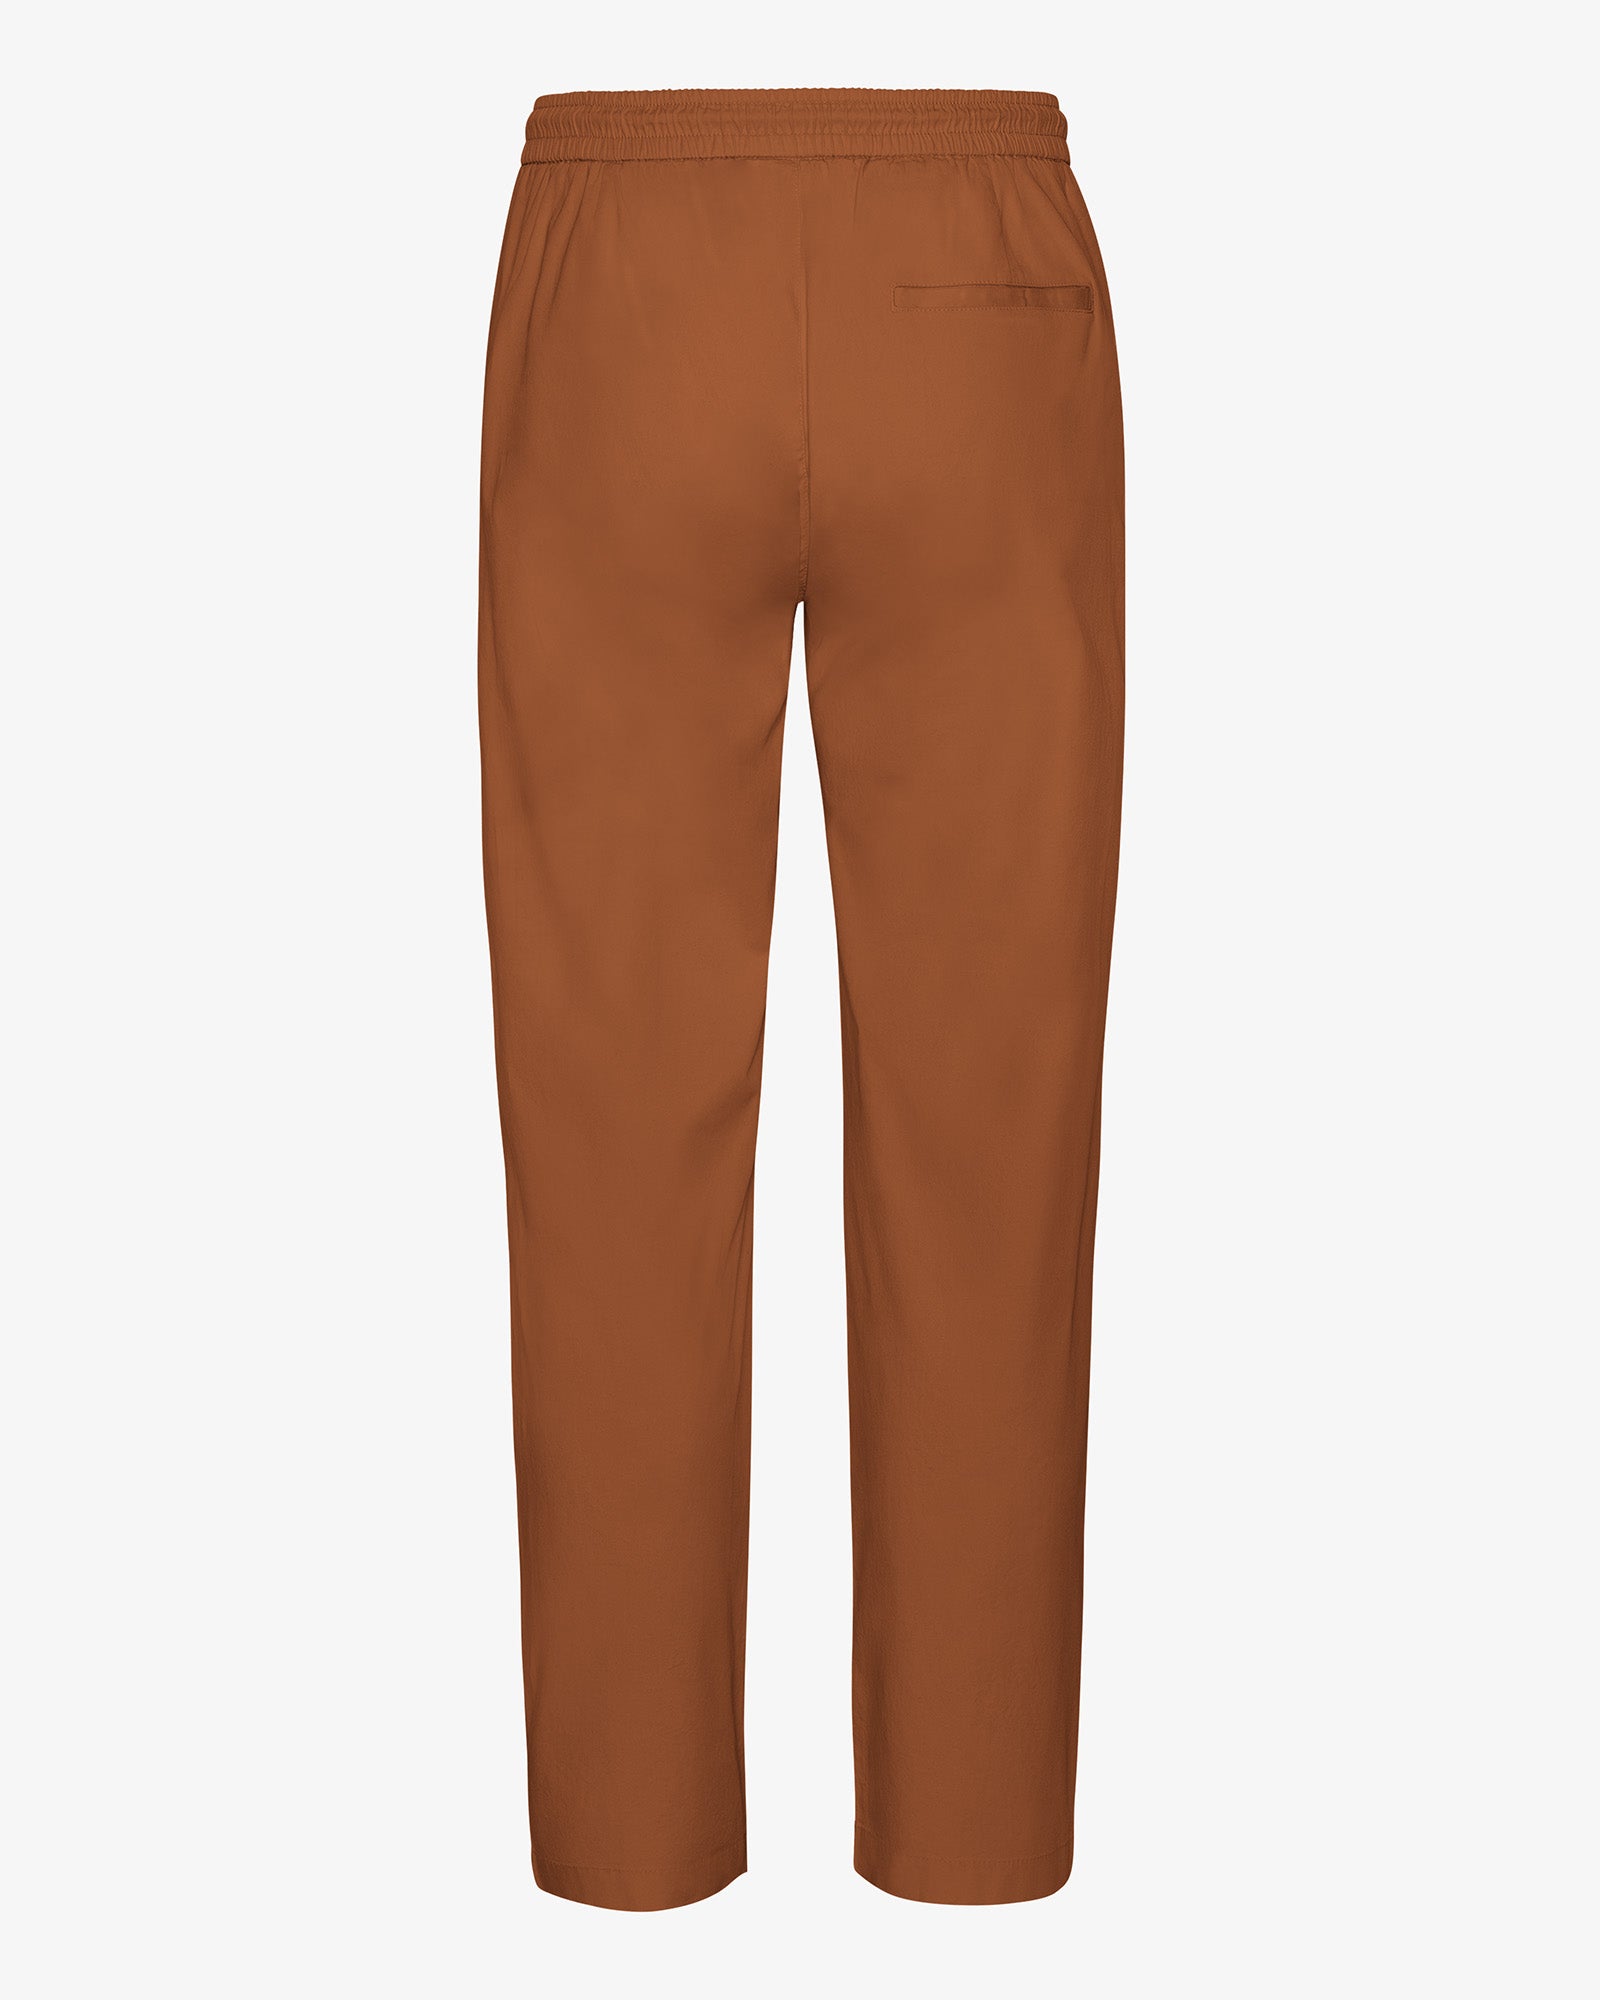 Organic Twill Pants - Ginger Brown